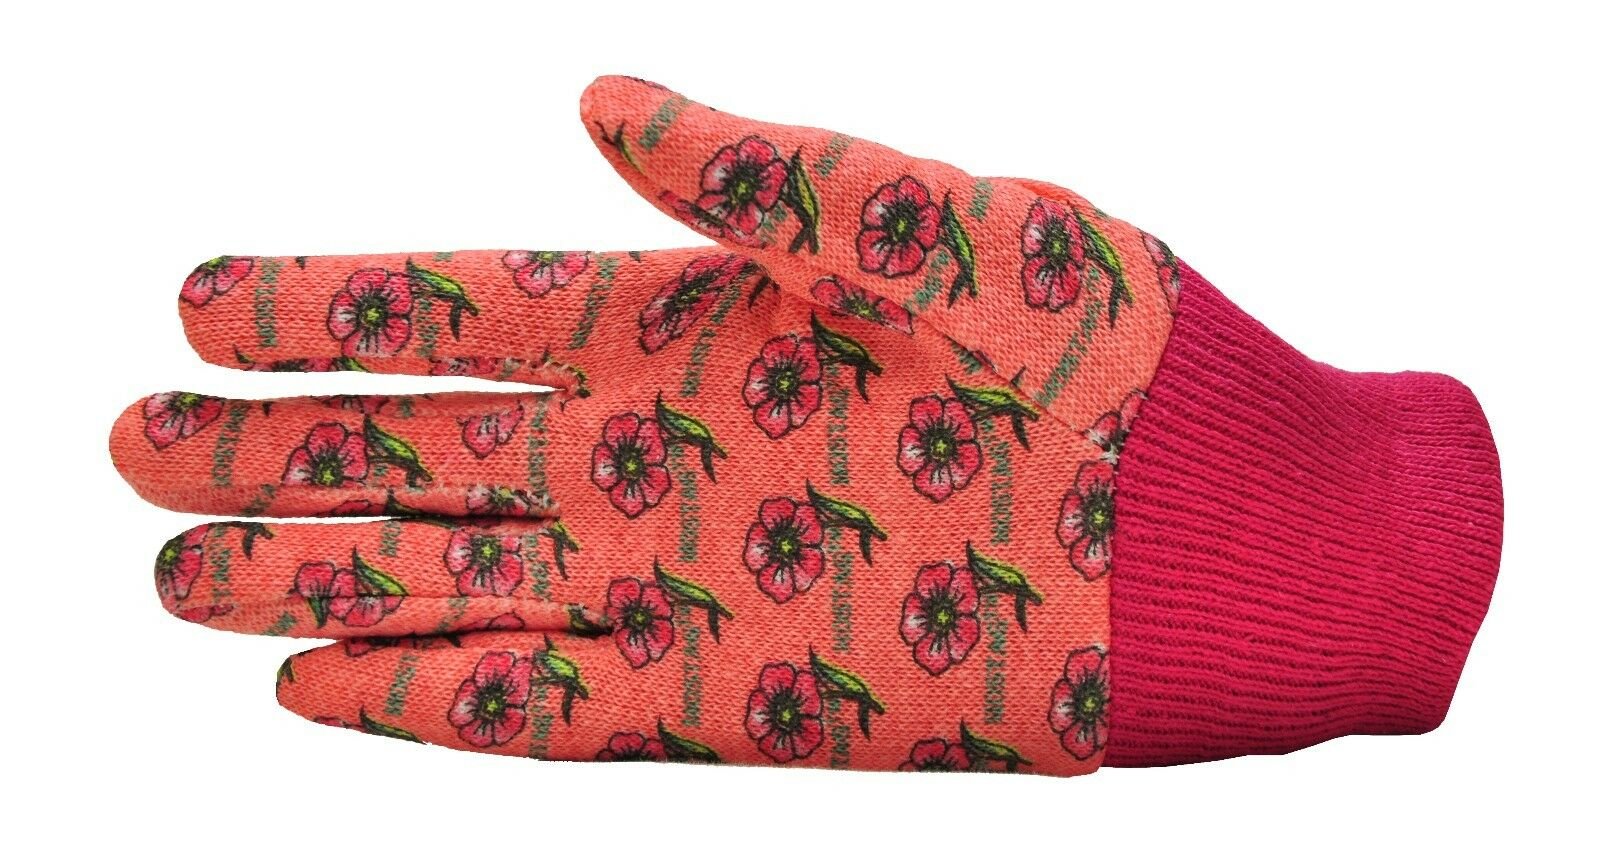 G & F Kids Garden Gloves 1823-3 JustForKids Work Gloves, 3 Pairs Green/Red/Blue per Pack - image 4 of 11